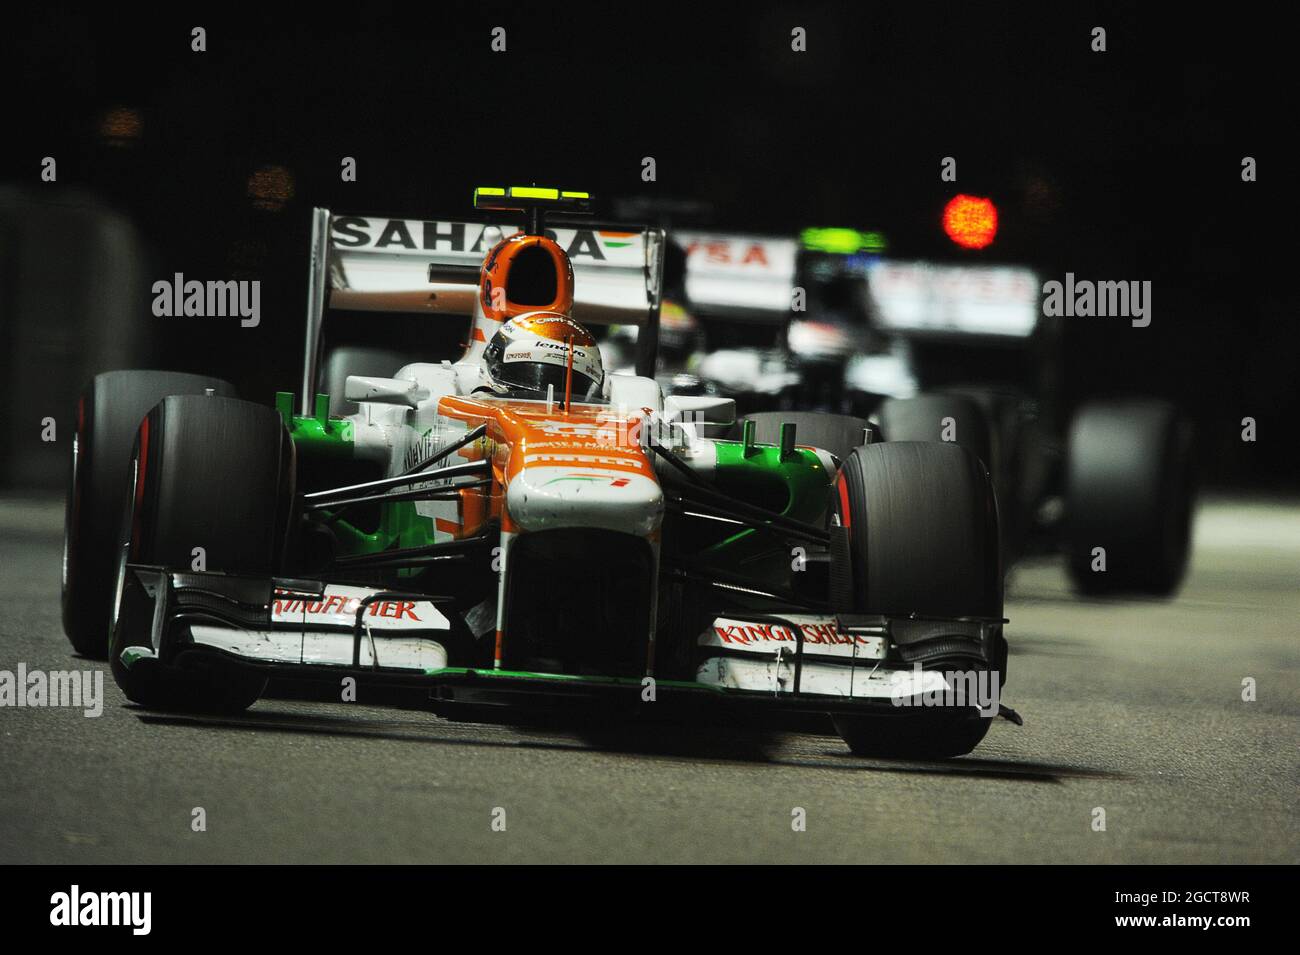 Adrian Sutil (GER) Sahara Force India VJM06. Gran Premio di Singapore, domenica 22 settembre 2013. Circuito Marina Bay Street, Singapore. Foto Stock